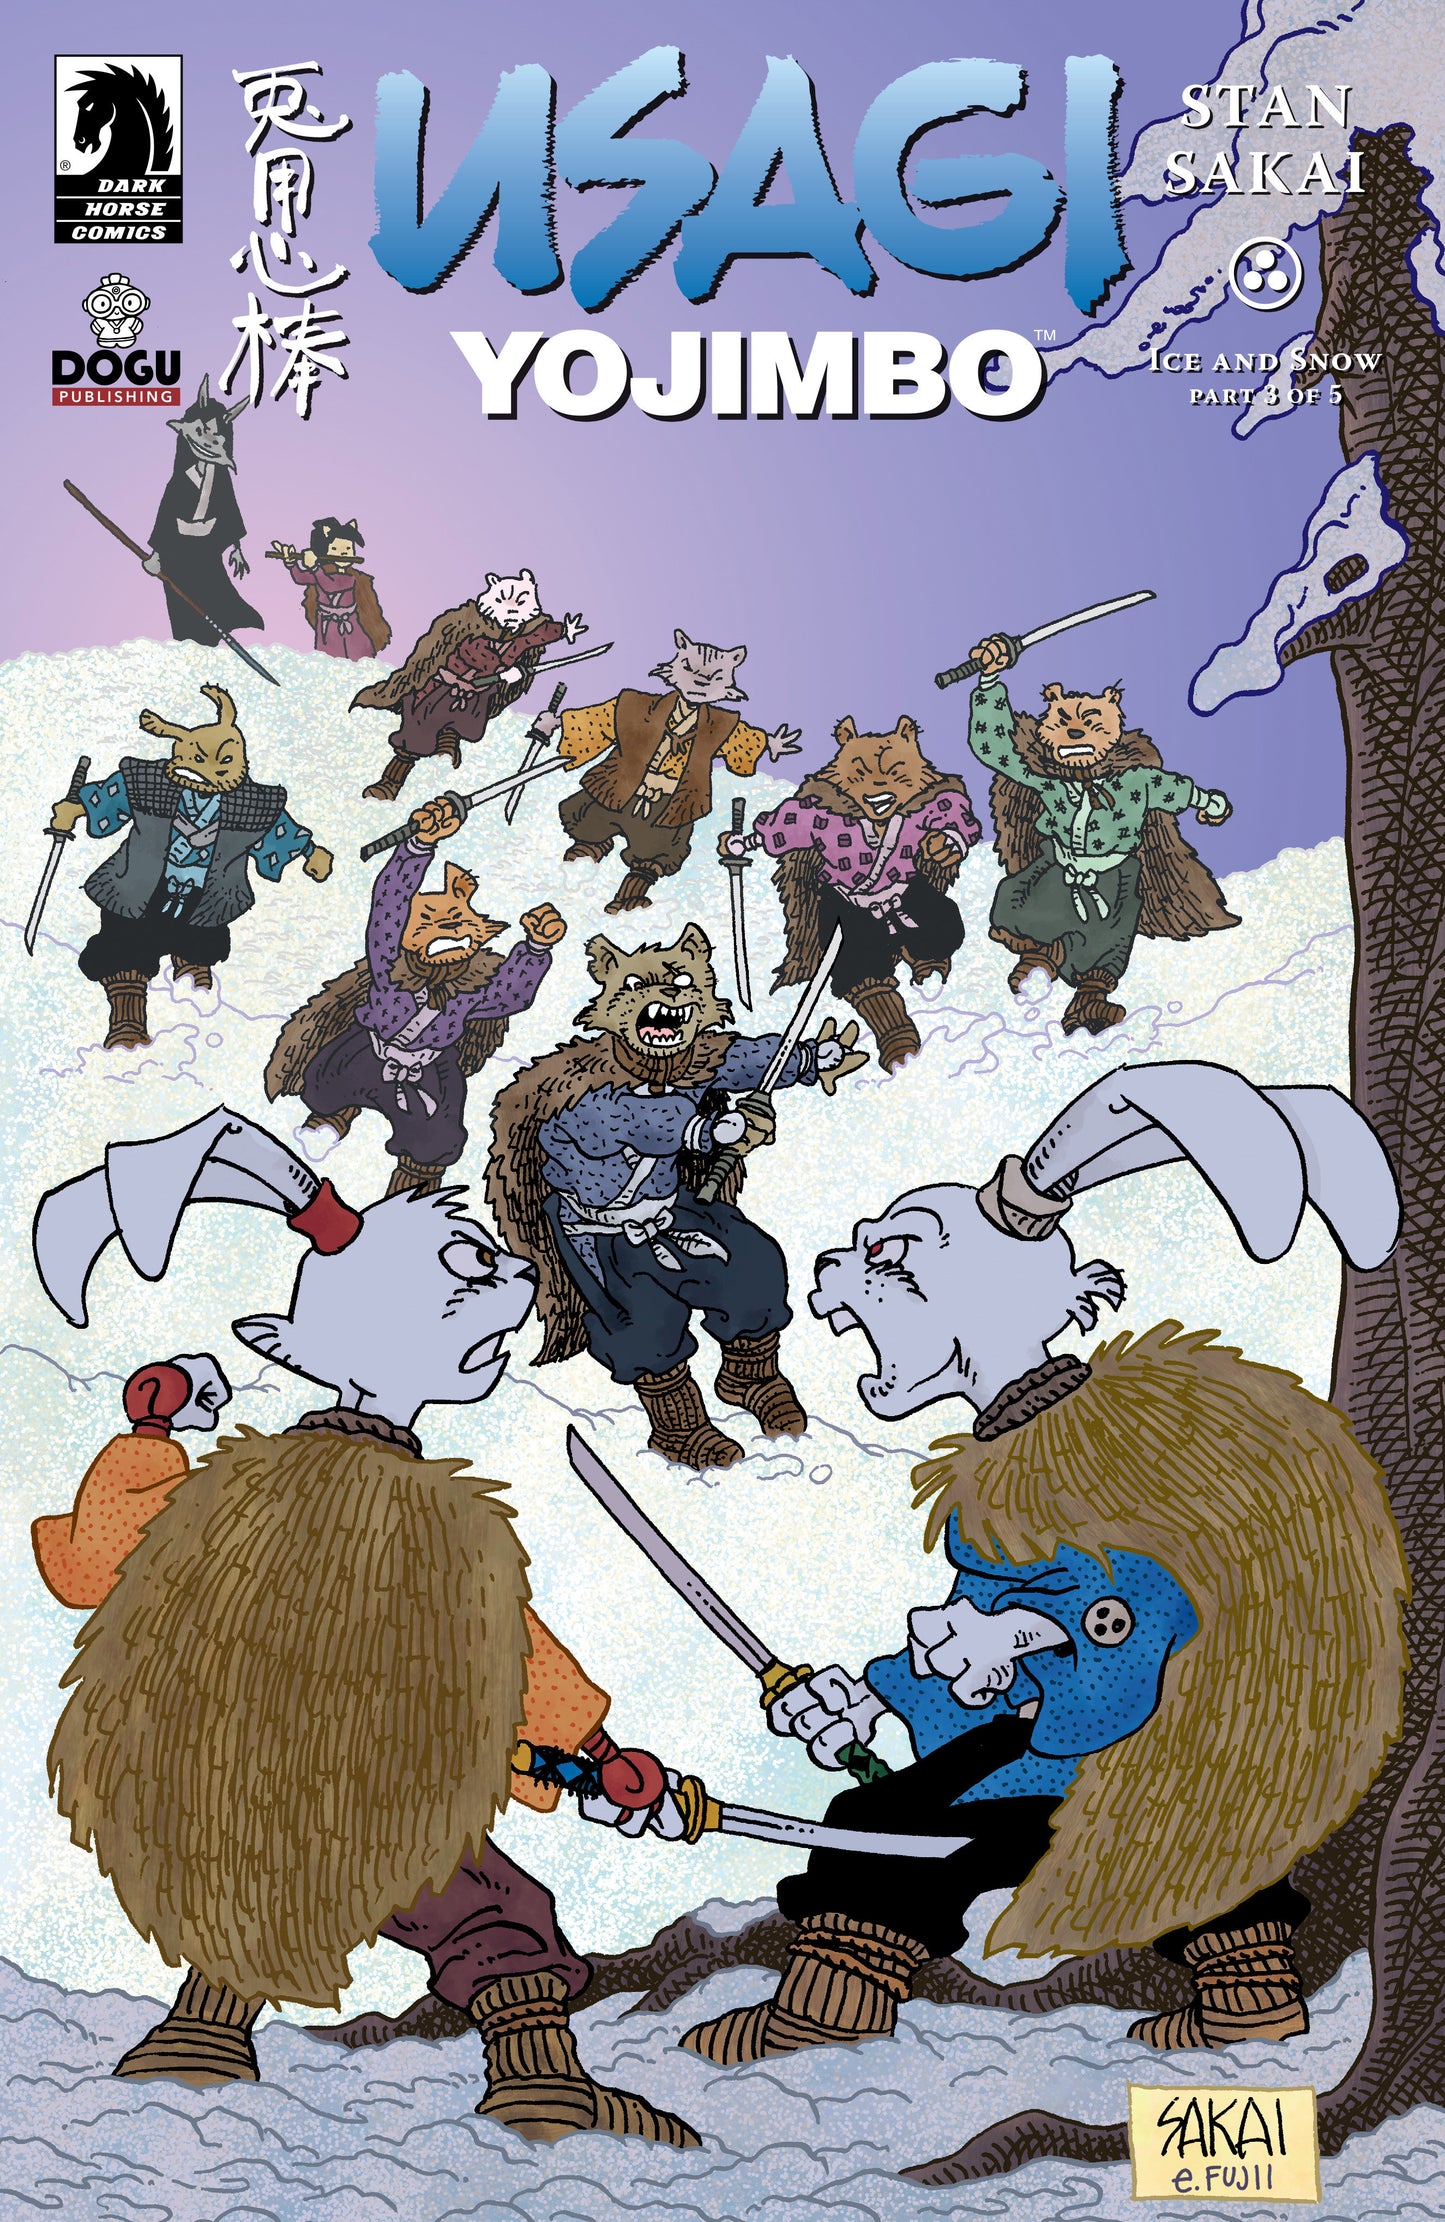 Usagi Yojimbo: Ice And Snow #3 (Cover A) (Stan Sakai)